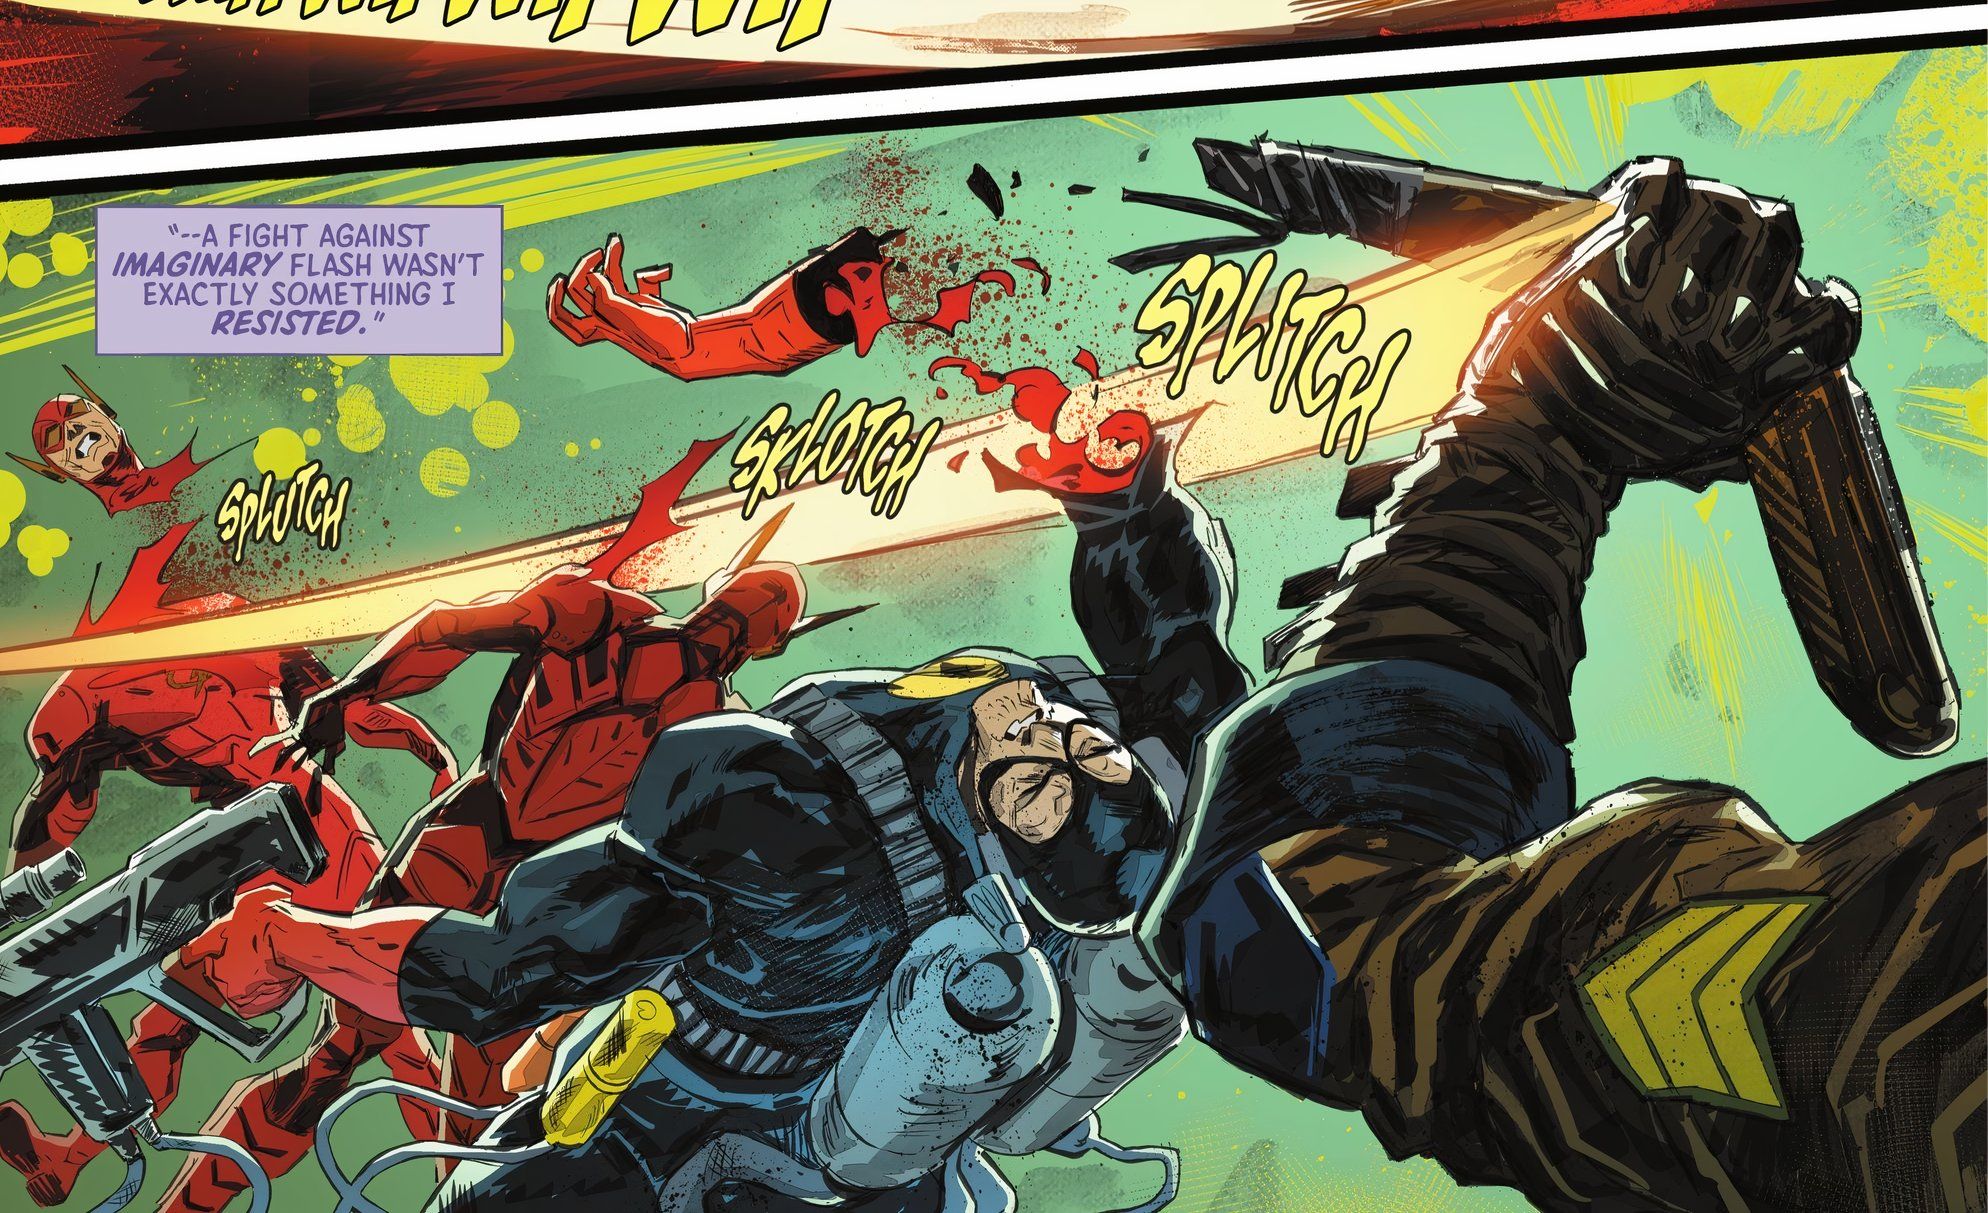 Suicide Squad Kill Arkham Asylum #4 featuring Captain Boomerang Flash and Condiment King